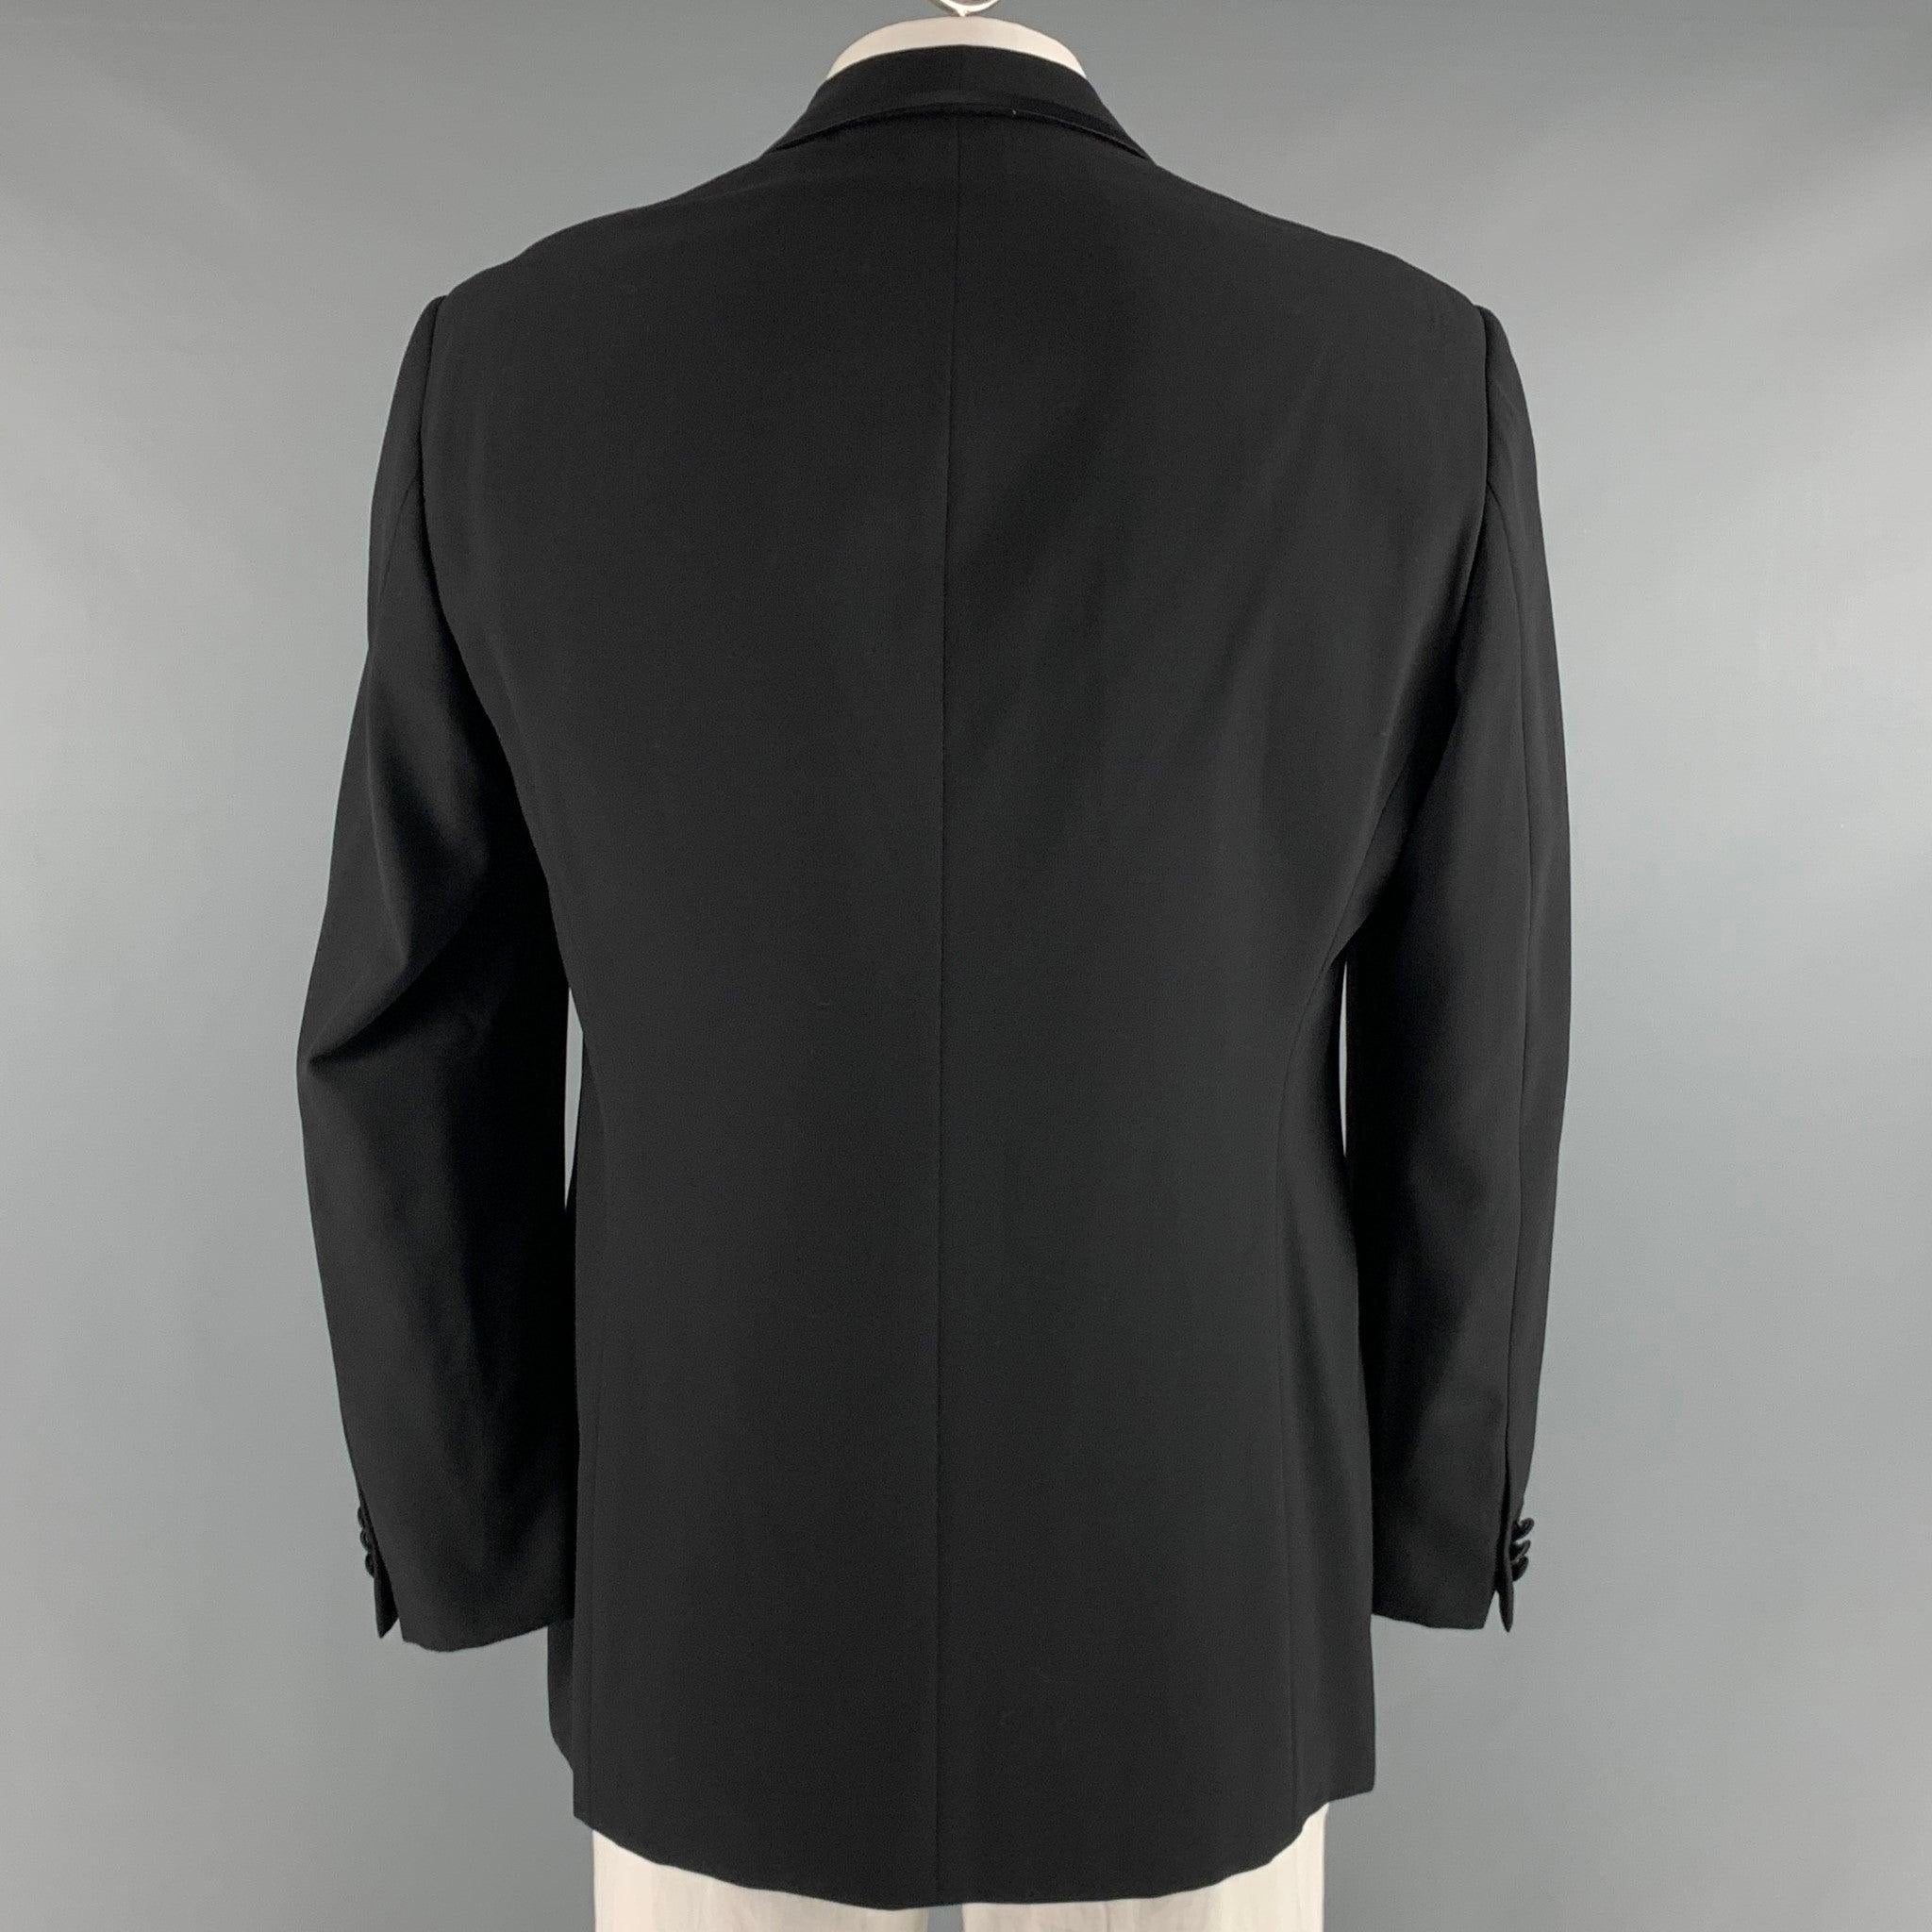 ARMANI COLLEZIONI Size 42 Black Solid Wool Shawl Collar Sport Coat In Excellent Condition For Sale In San Francisco, CA